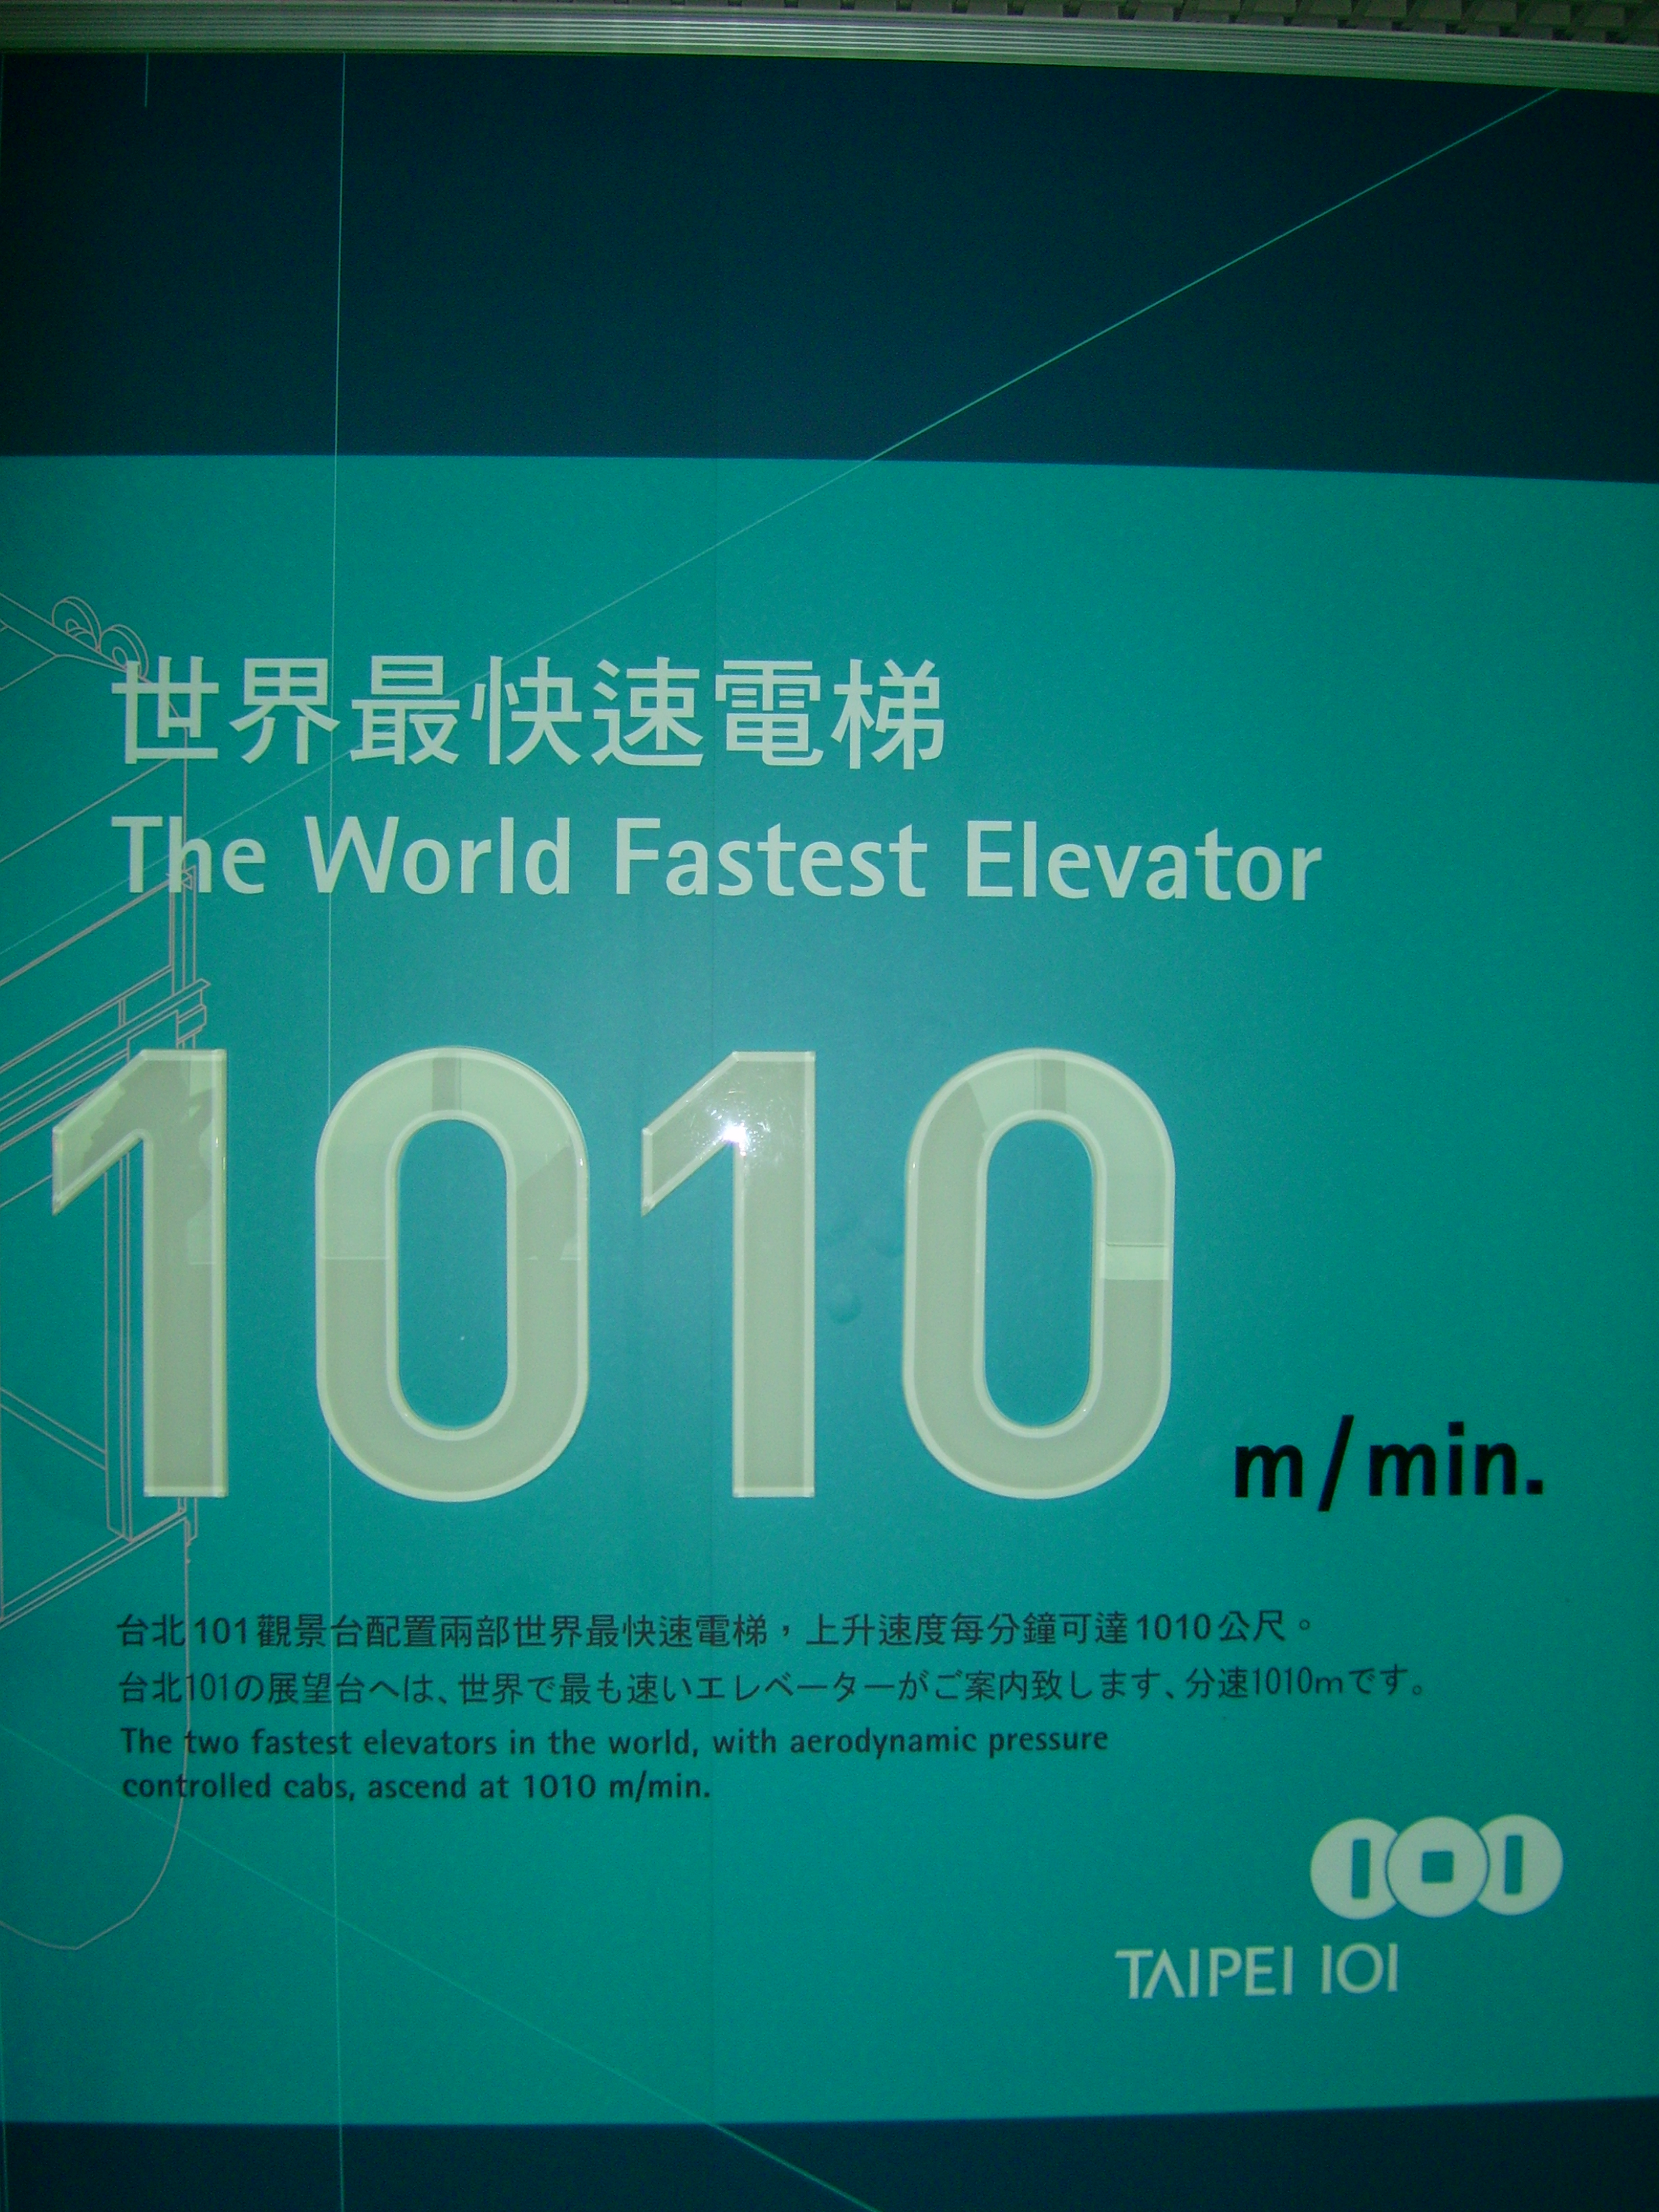 The_World_Fastest_Elevator_-_Taipei_101.JPG